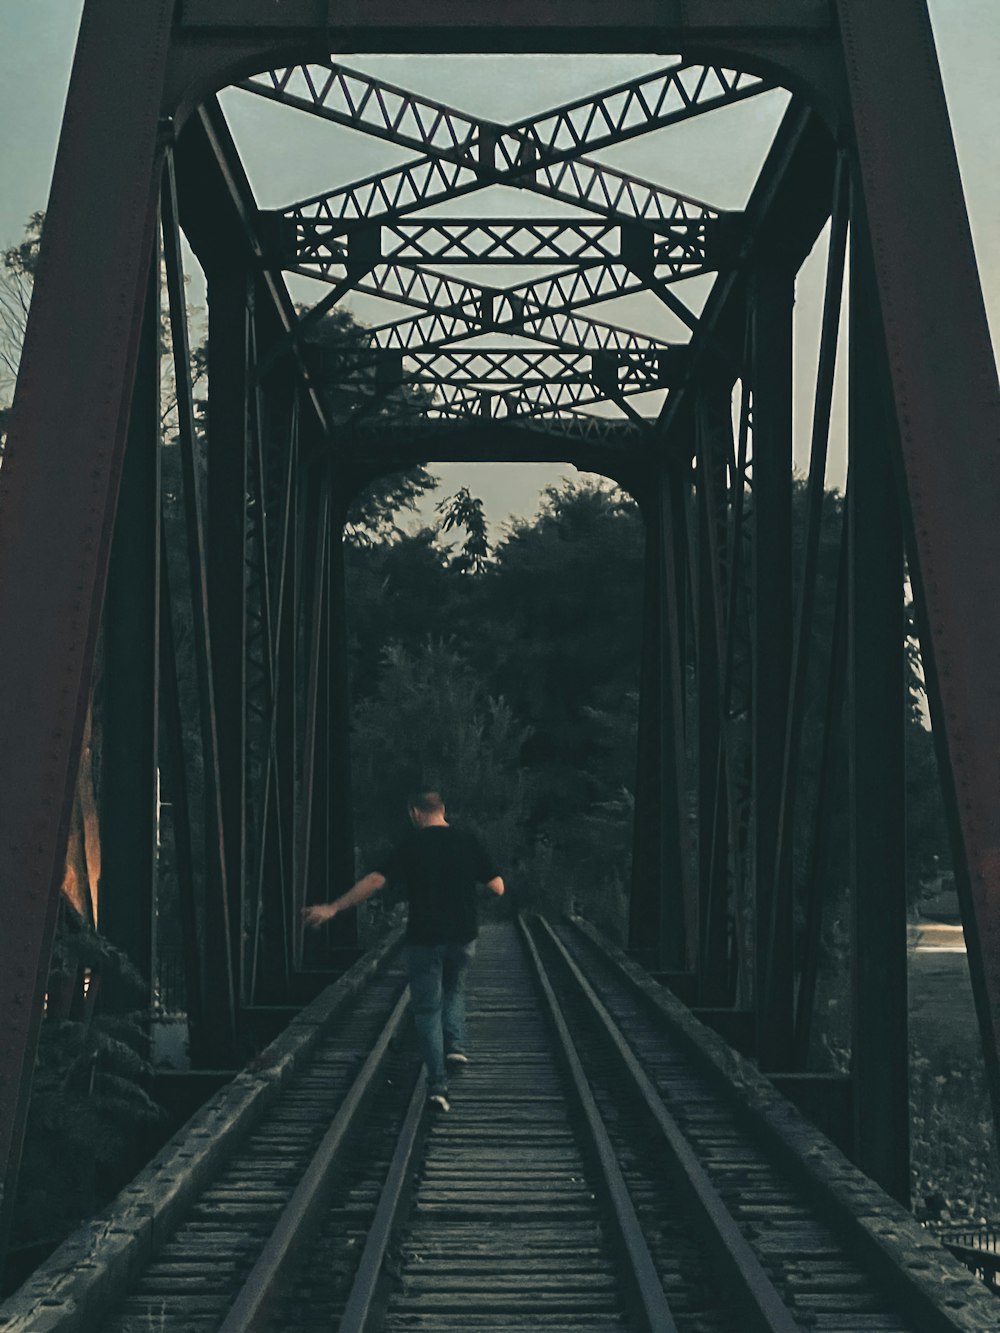 a man walking across a train track under a bridge